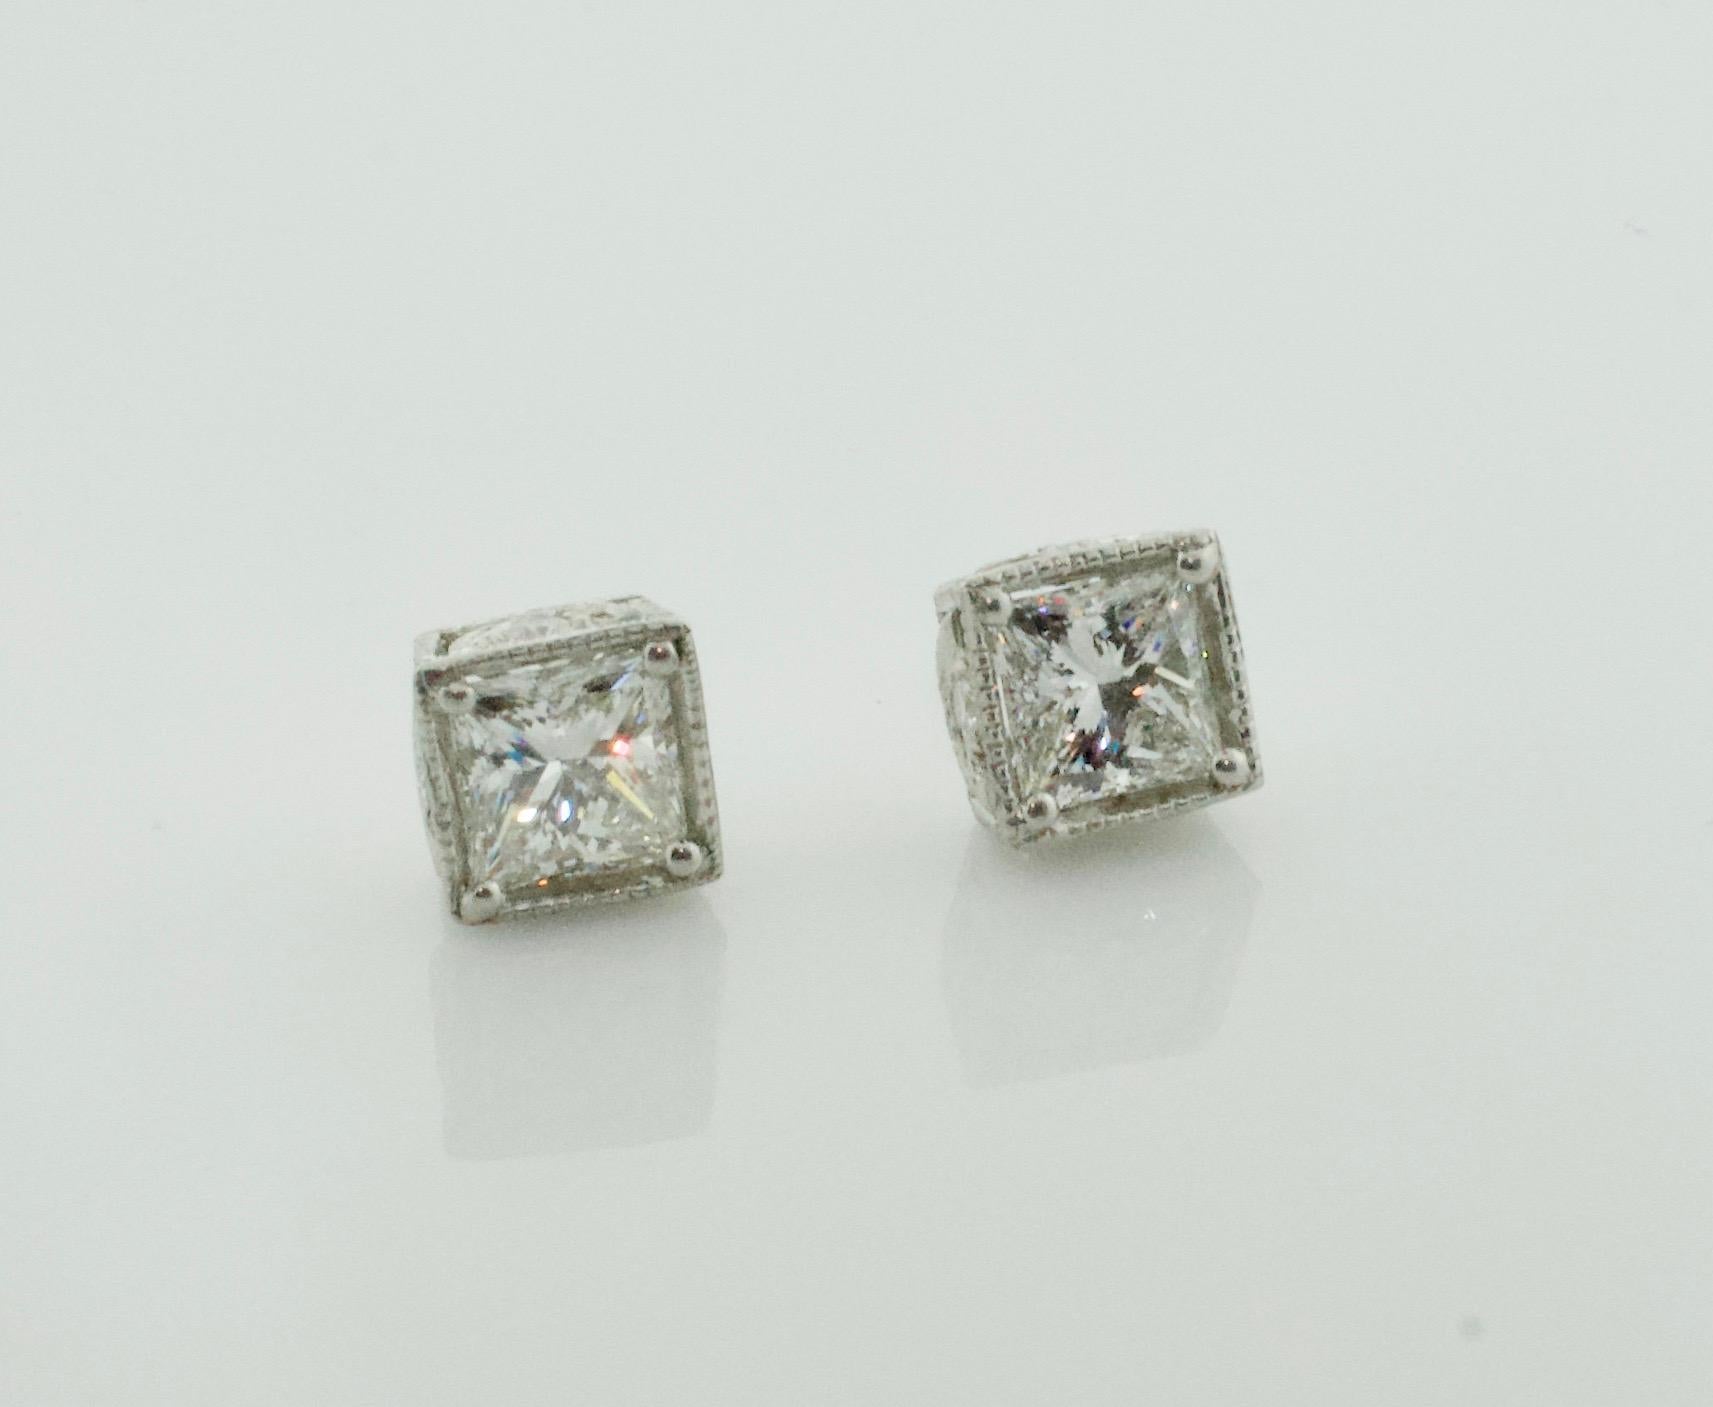 Large Princess Cut Diamond Stud Earrings in Platinum 5.10 Carat H-I SI1 GIA 4